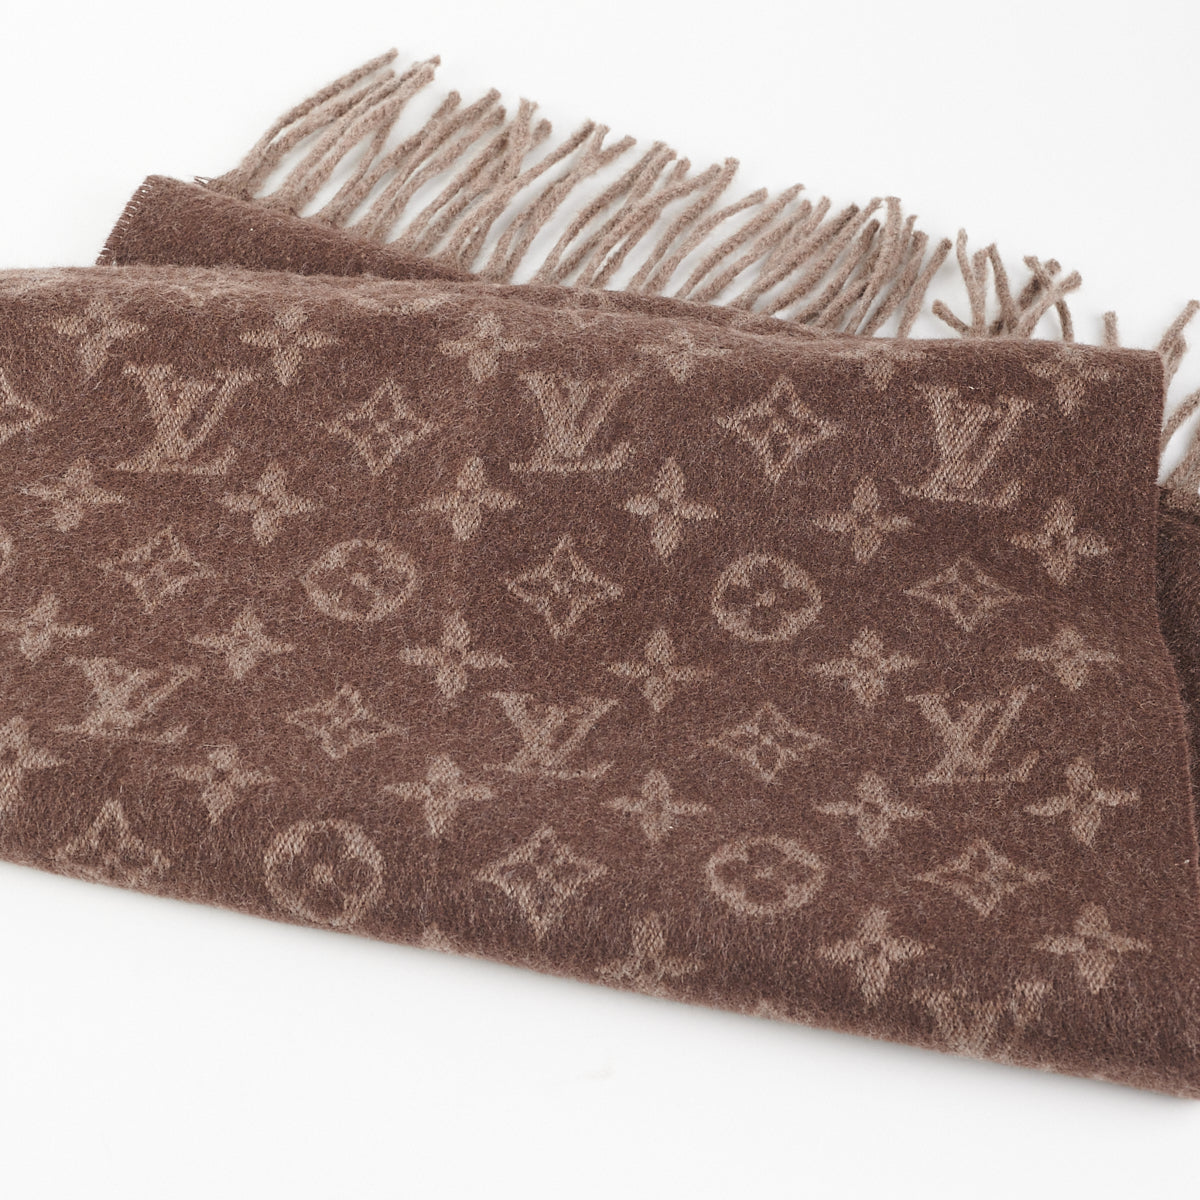 Shop Louis Vuitton MONOGRAM Monogram gradient scarf (M70258